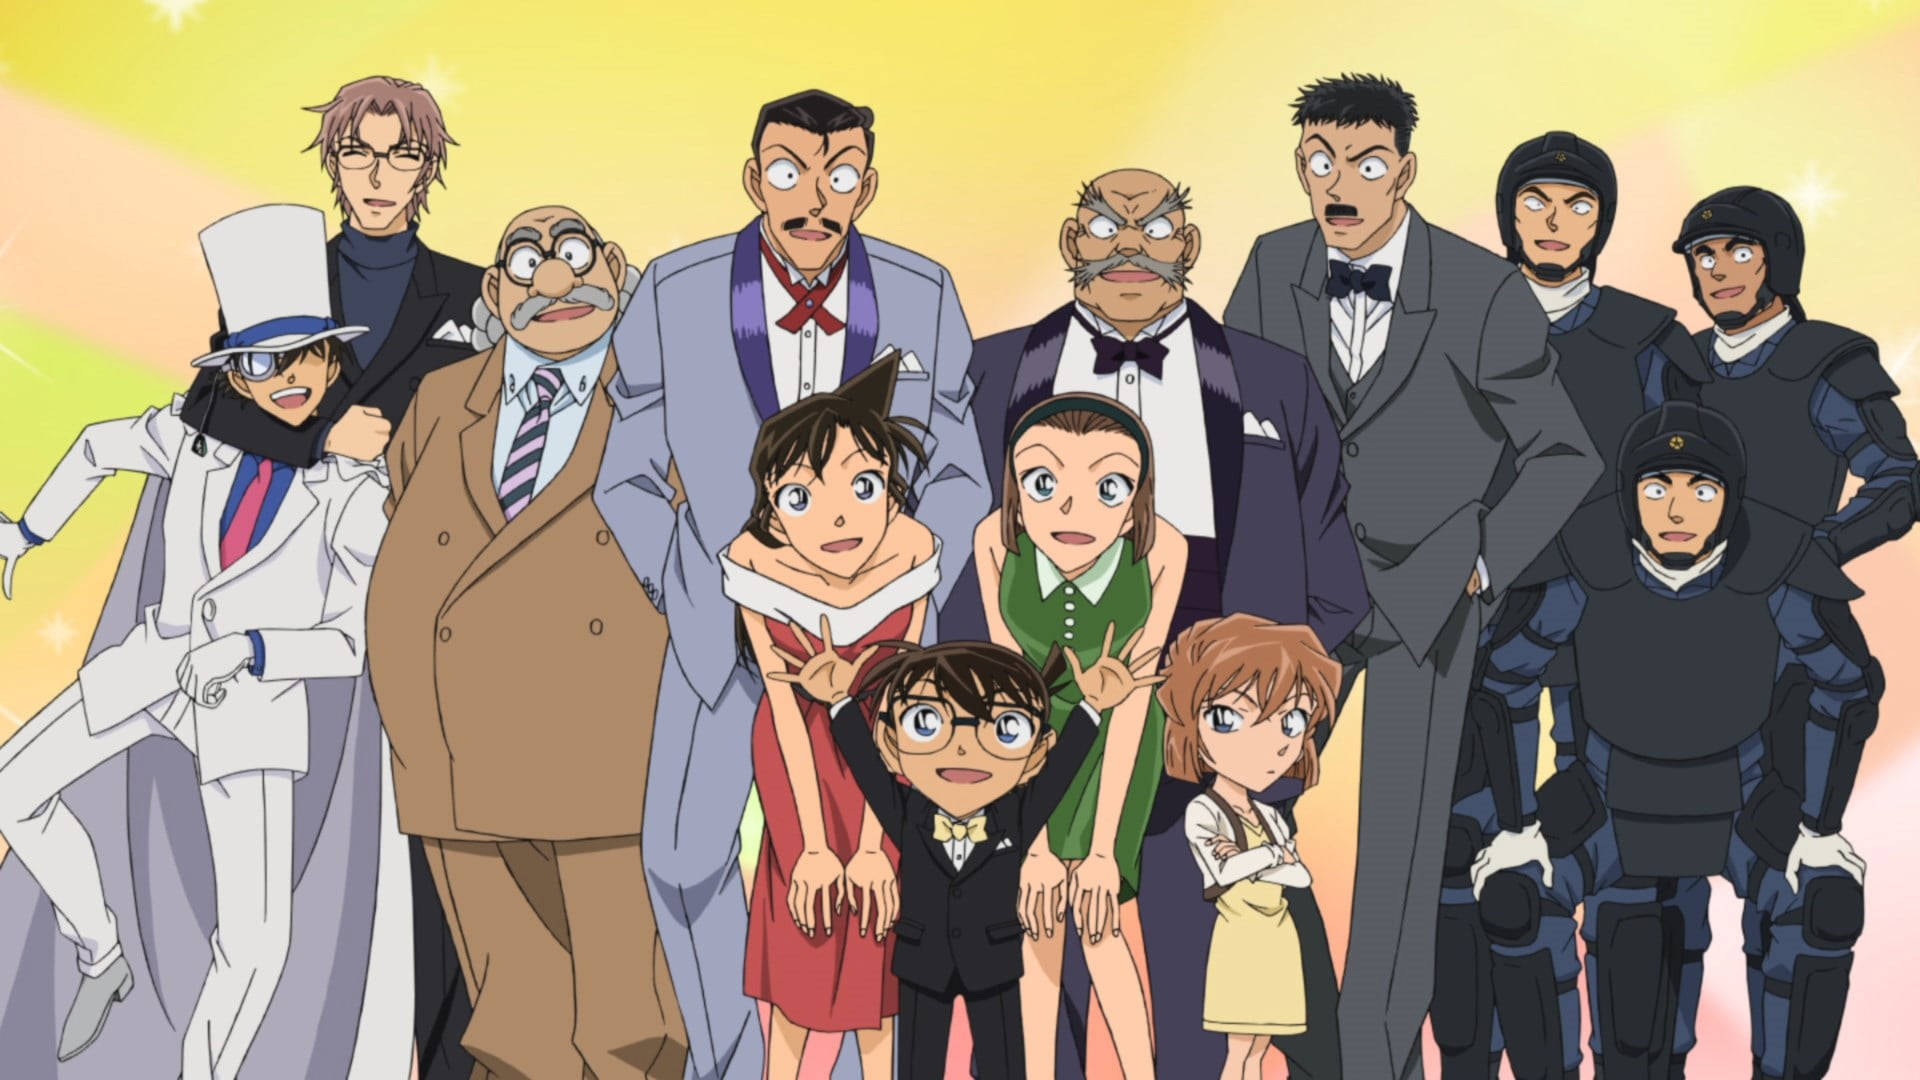 Personagensdo Anime Detective Conan. Papel de Parede